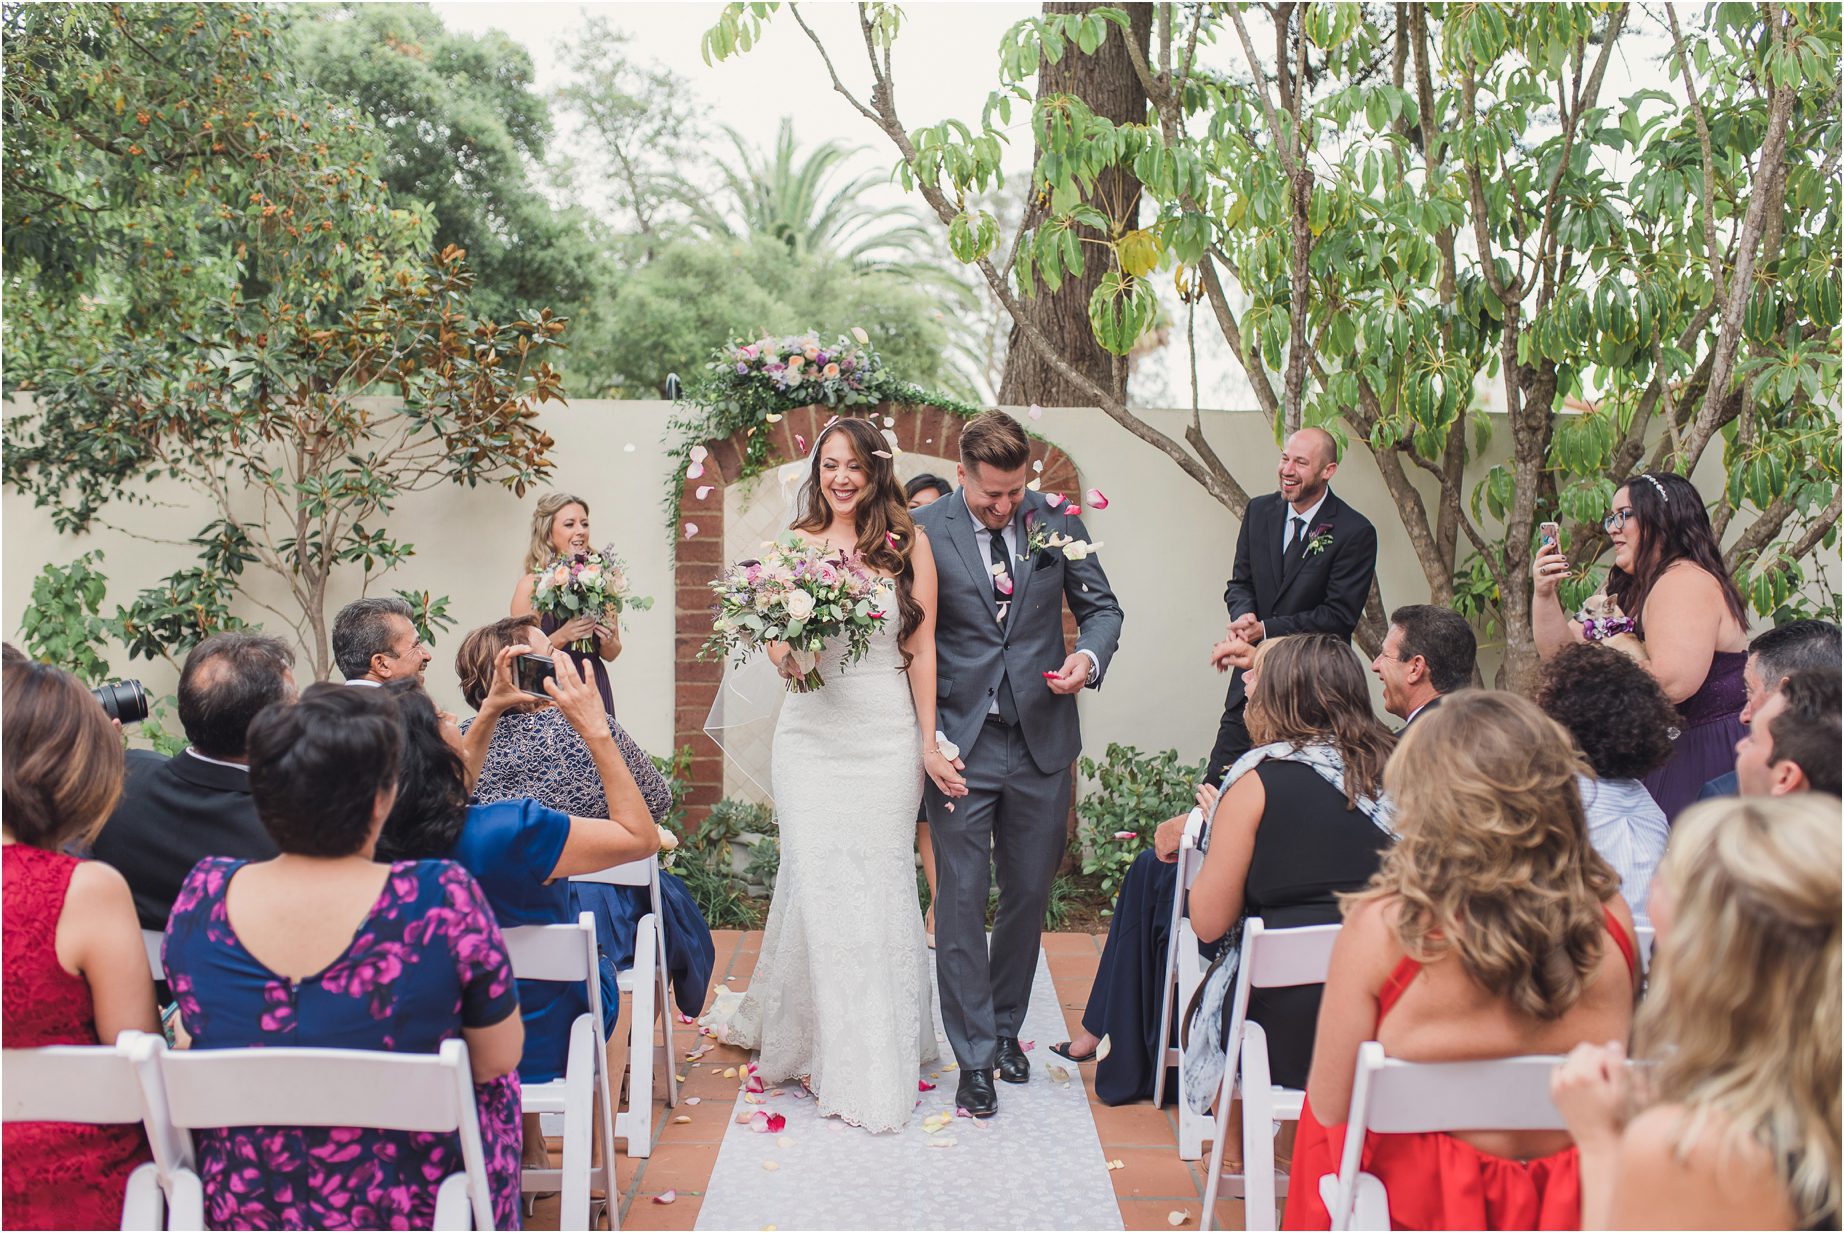 A bride and groom walk down the aisle at the belmond el encanto in Santa Barbara